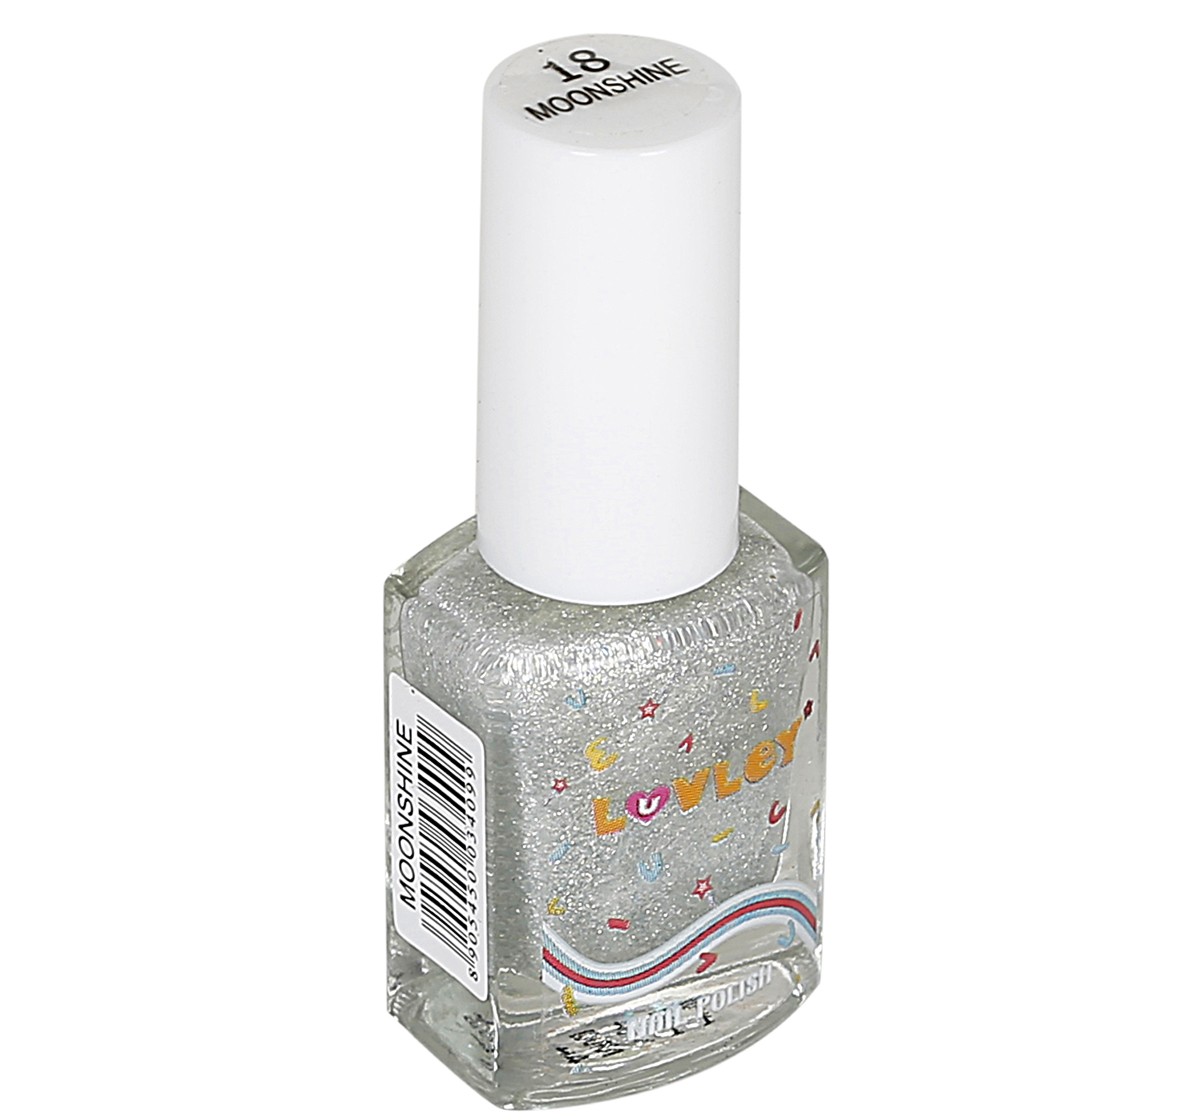 Luvley Breathable Moonshine Nail Polish 9ml Multicolour 6Y+